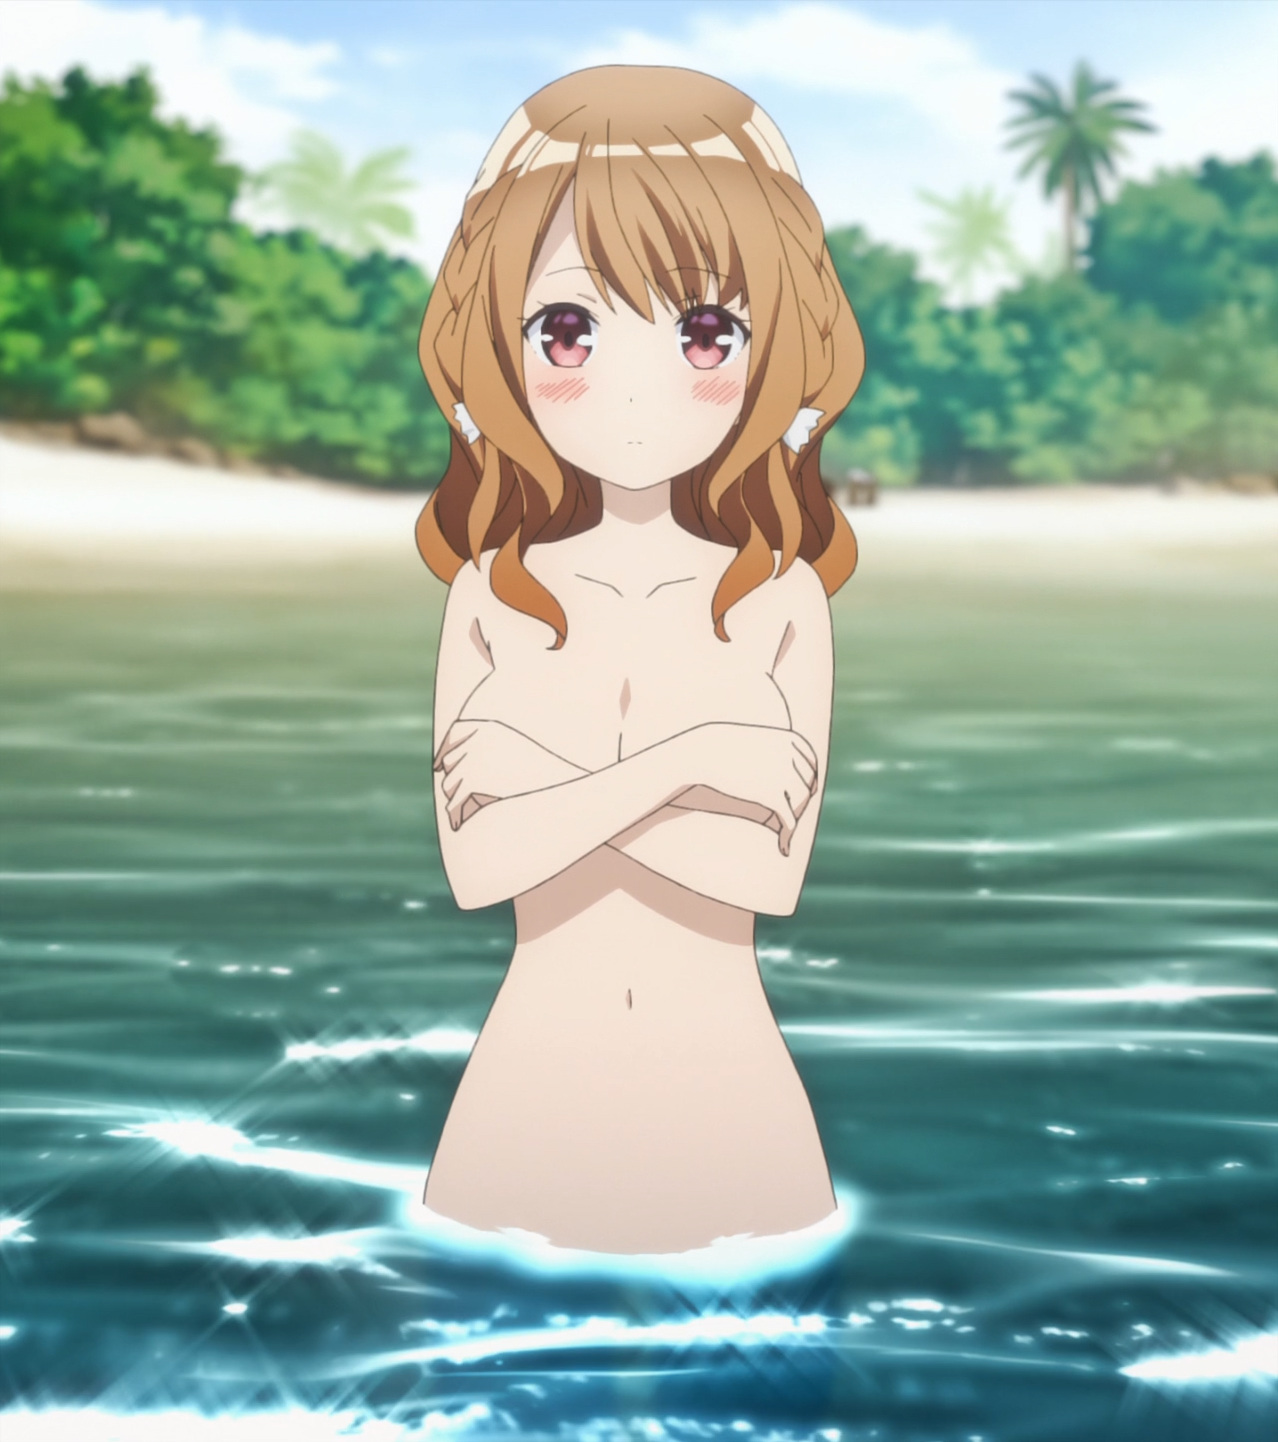 Anime Girl Skinny Dipping